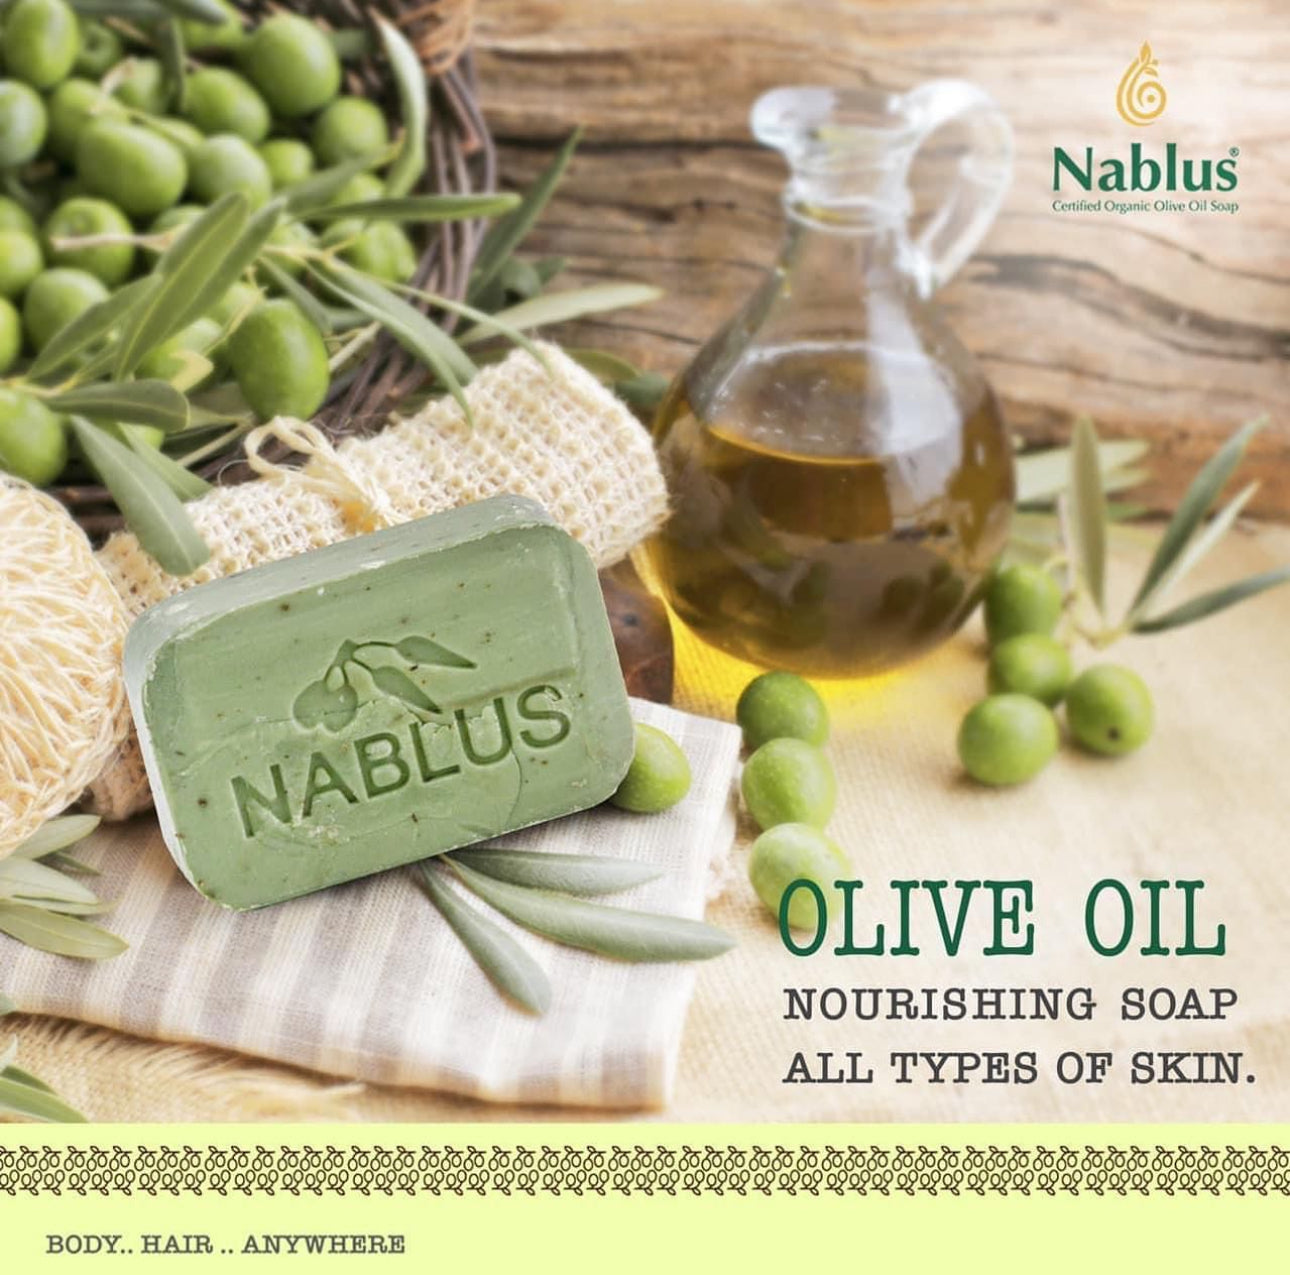 Organic Nablus Olive Oil Soap: Olive Oil